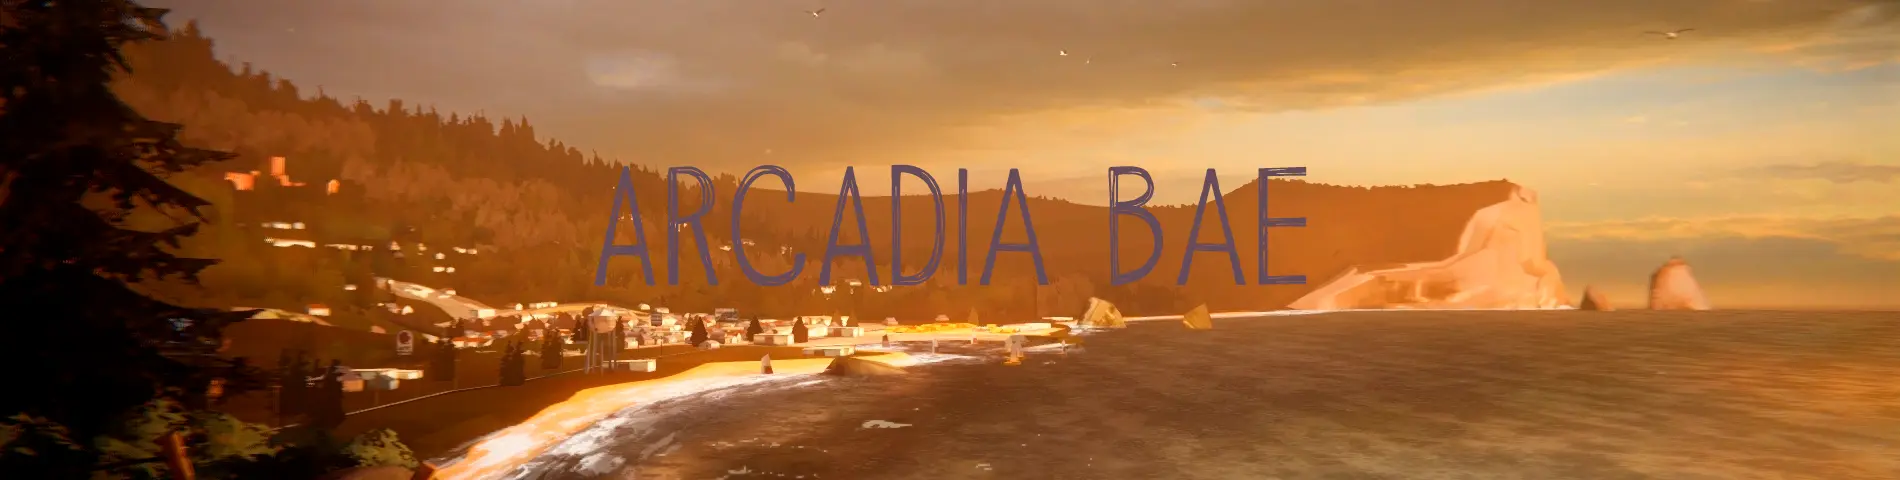 Arcadia Bae main image